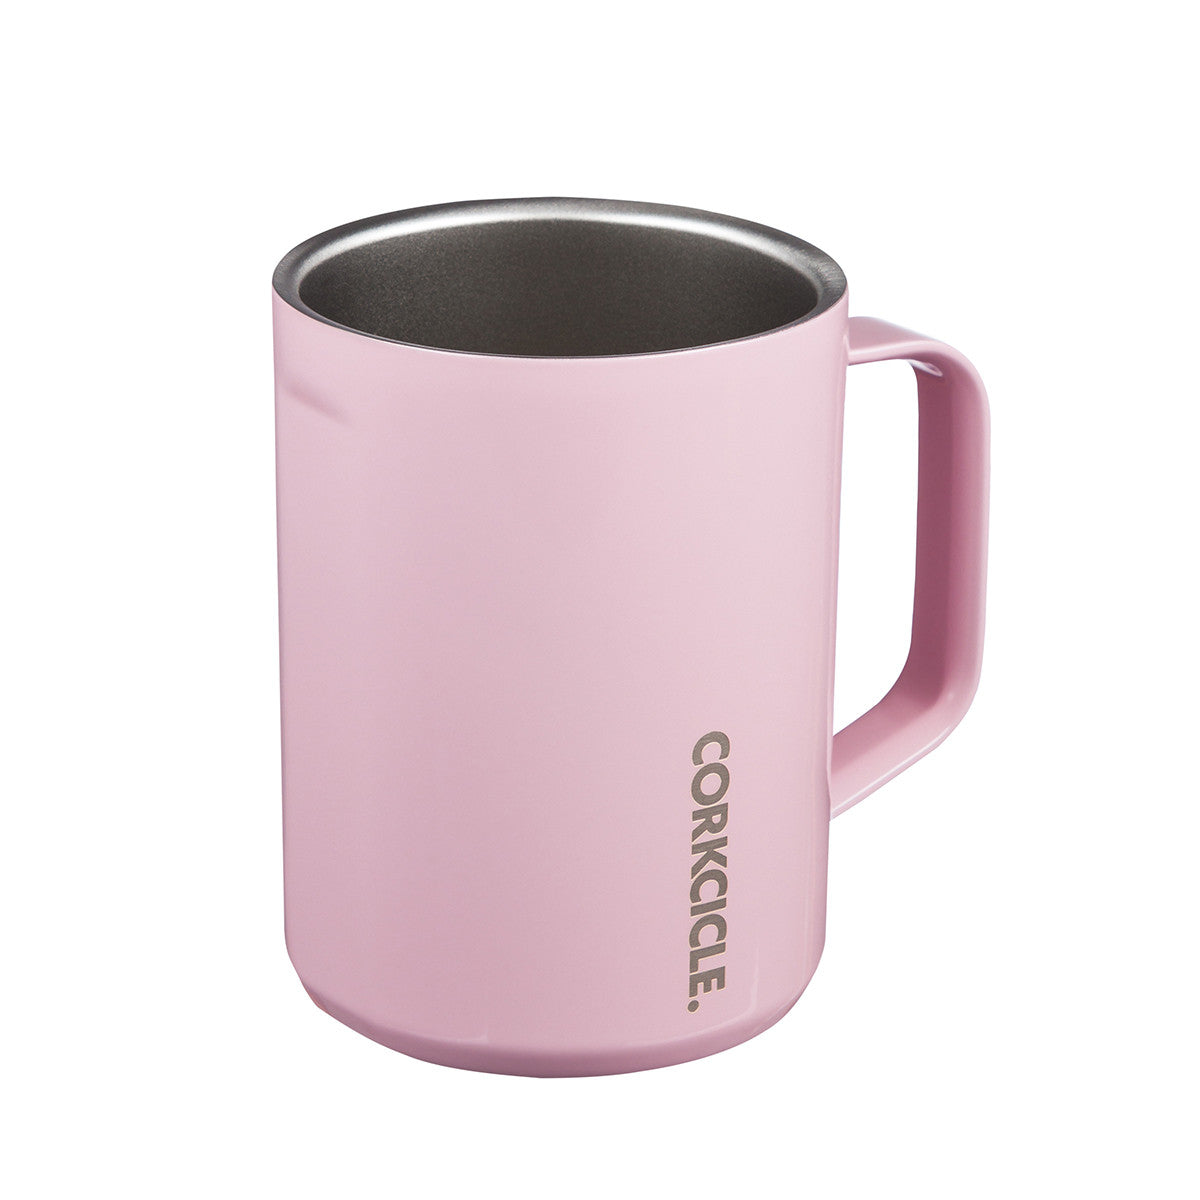 Corkcicle Classic Mug 475ml - Rose Quartz Insulated Stainless Steel Mug